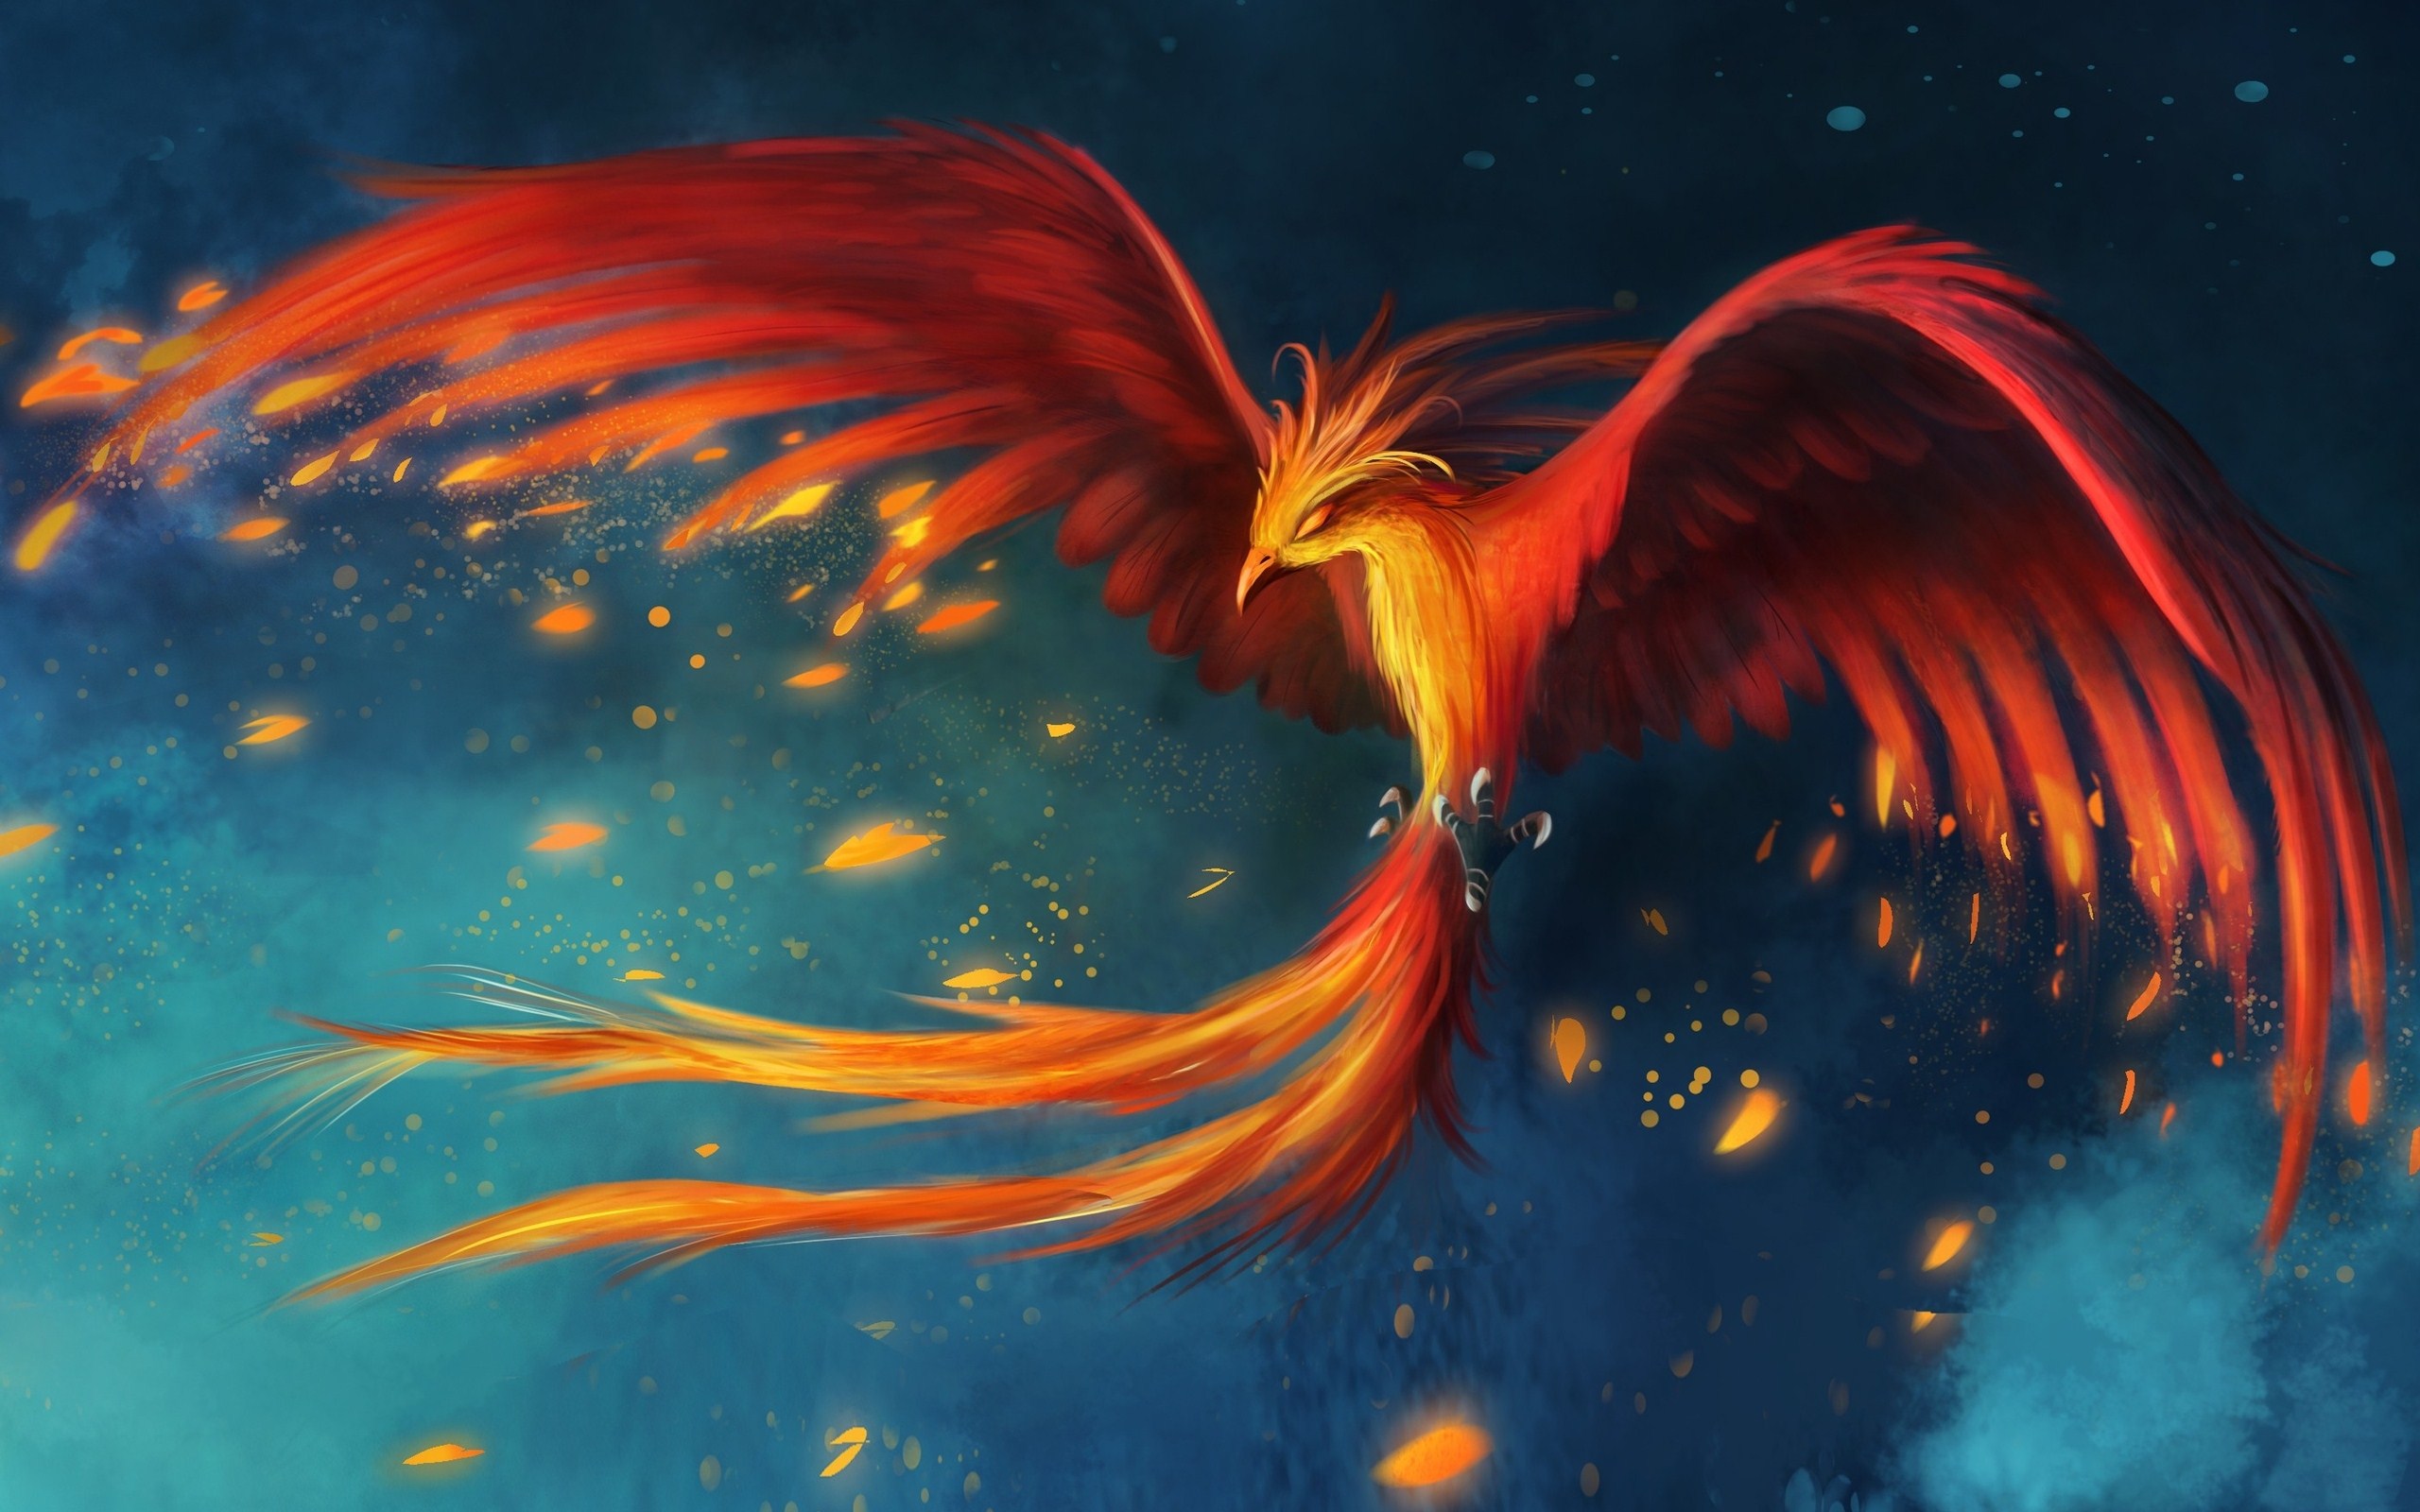 Phoenix Avatar